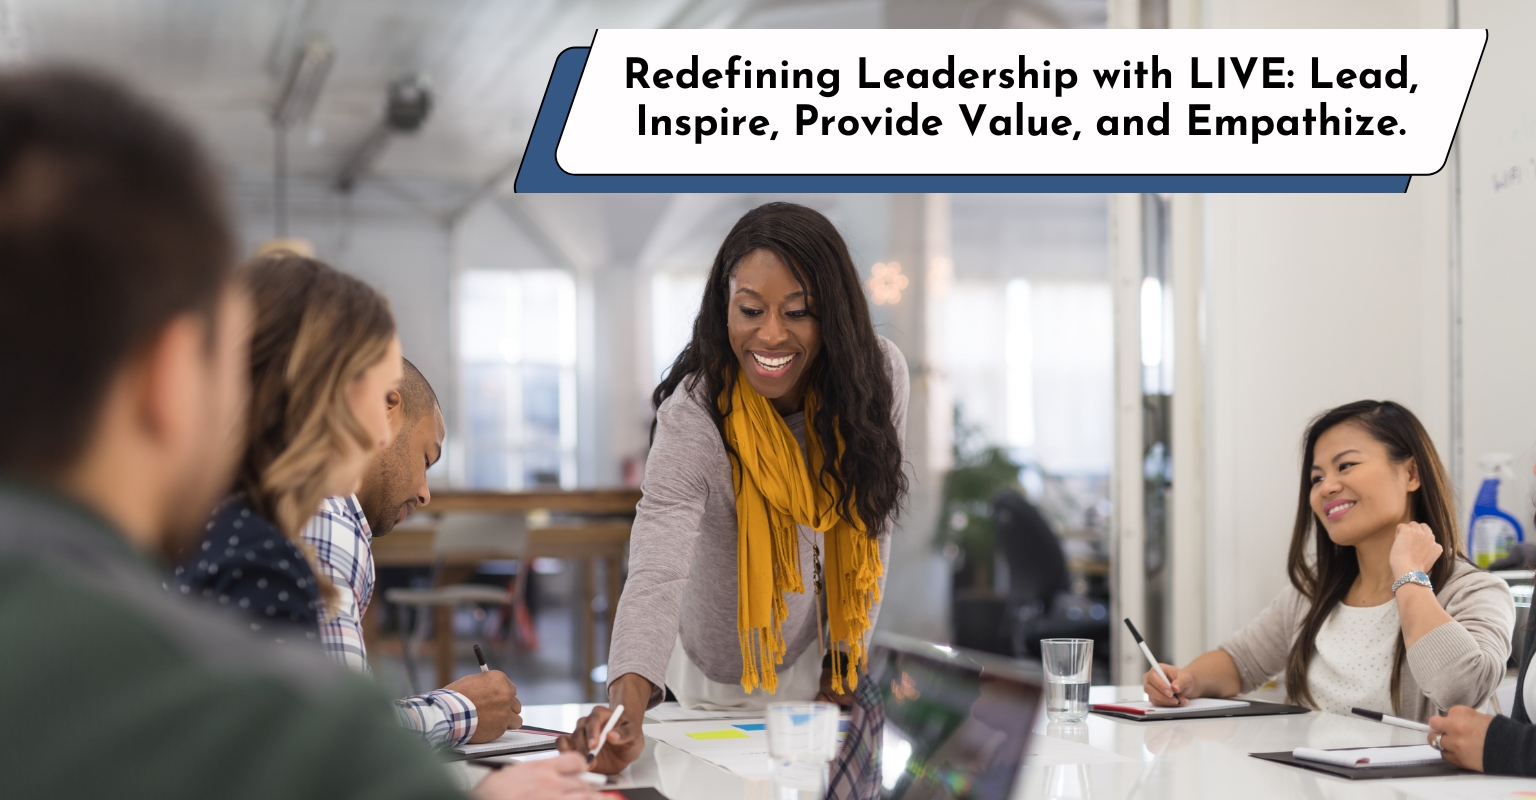 Amy Somerville, CEO of Success Enterprises, Sharing Her LIVE Leadership Principles